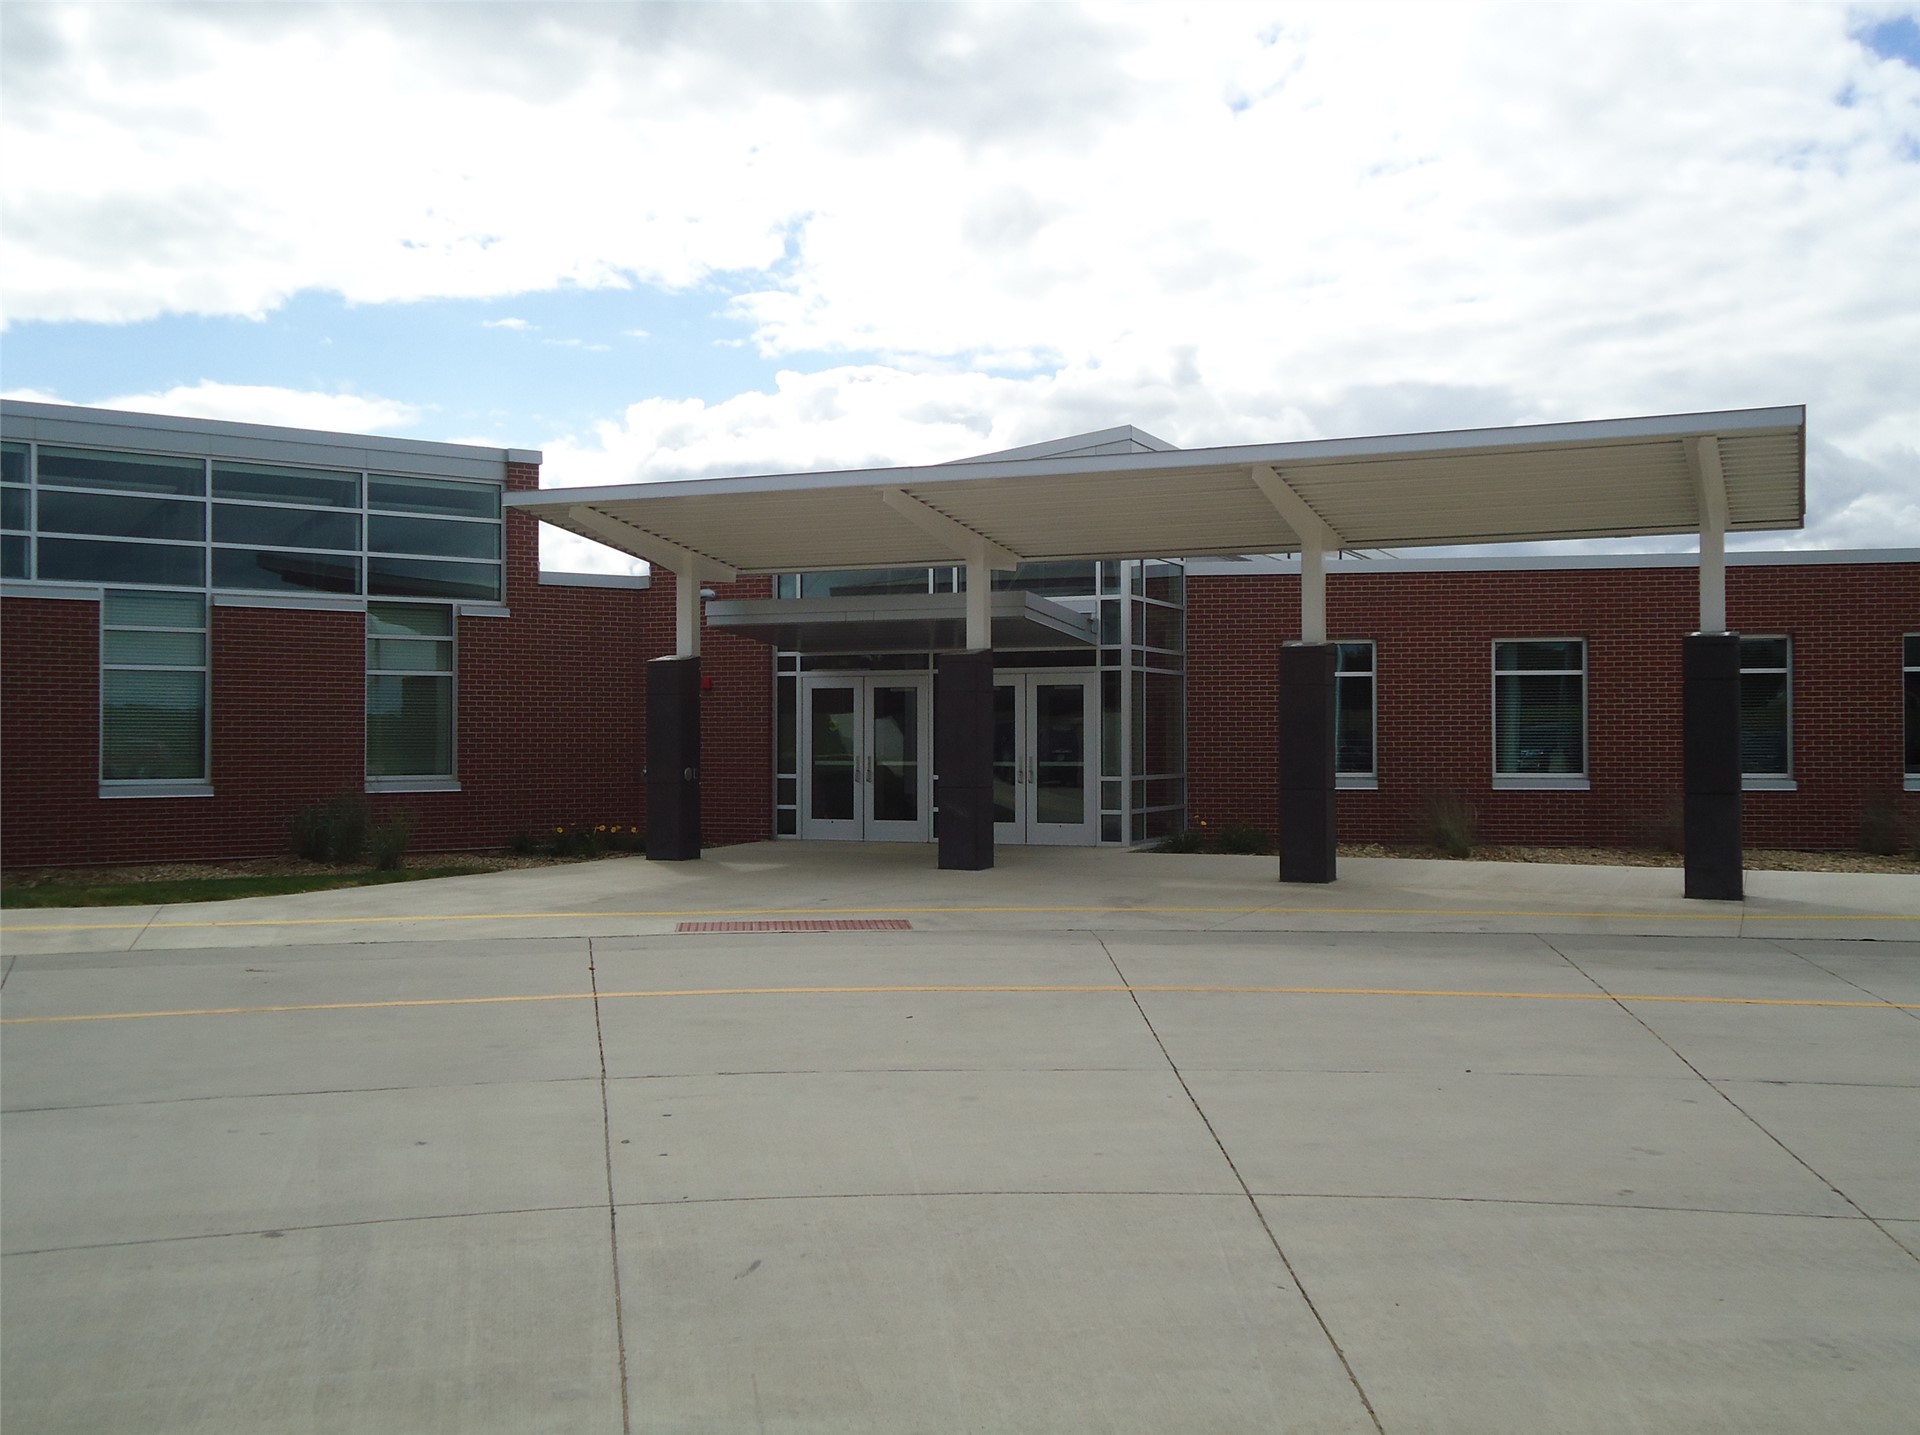 Dyersville Elementary School